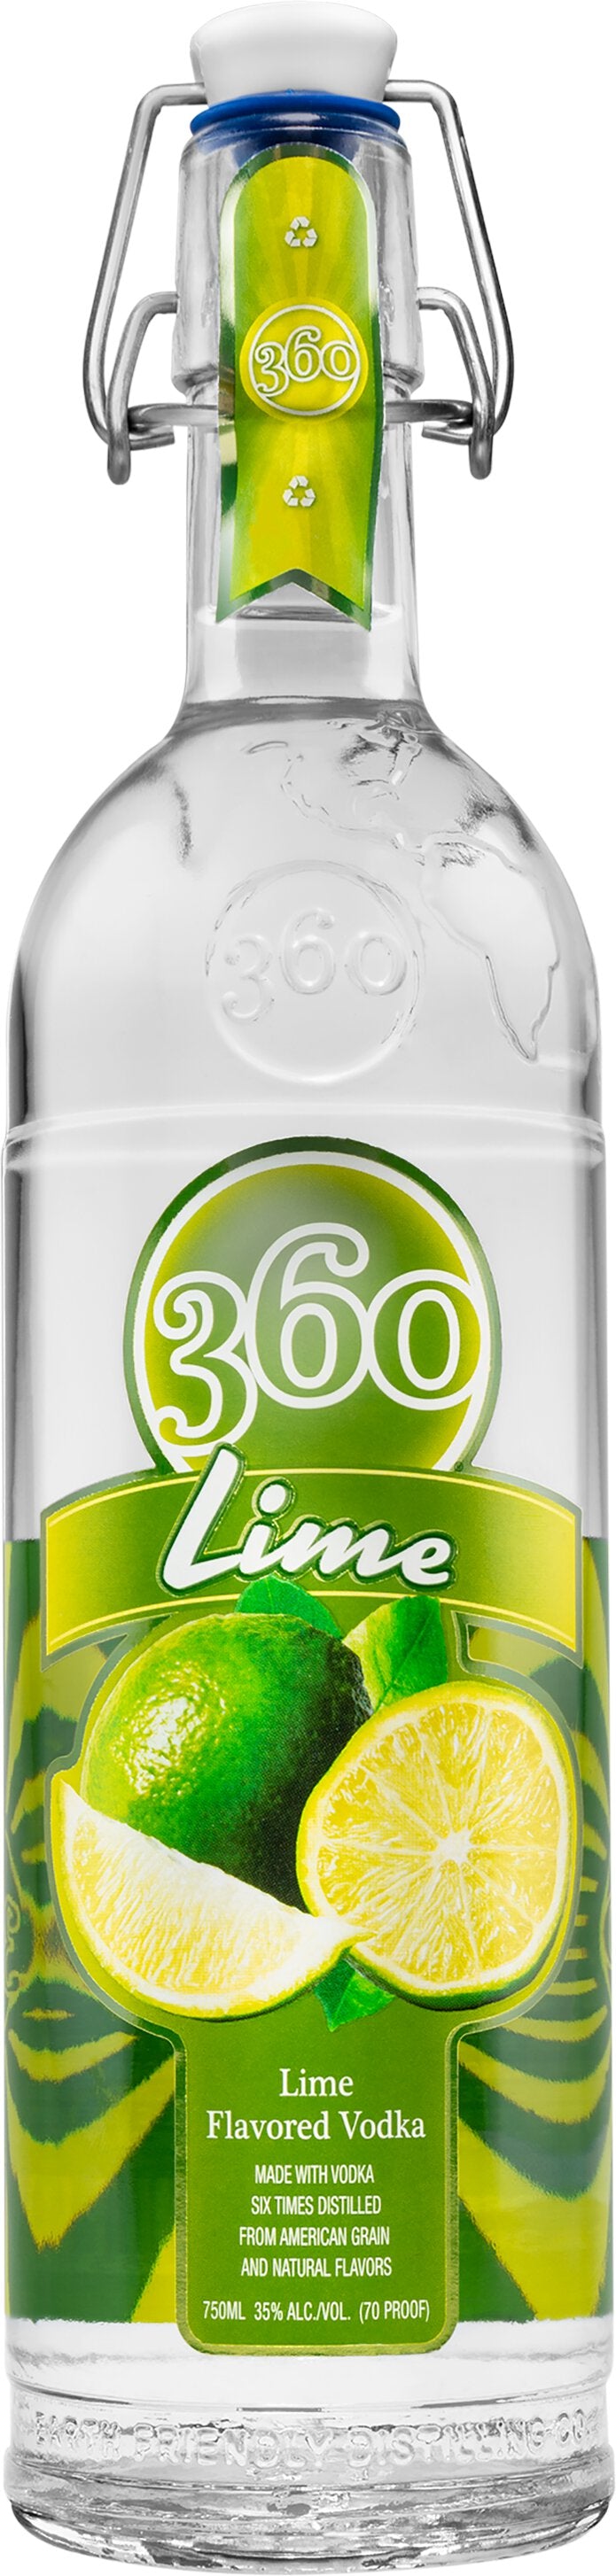 360 Flavors Lime Vodka 70pf